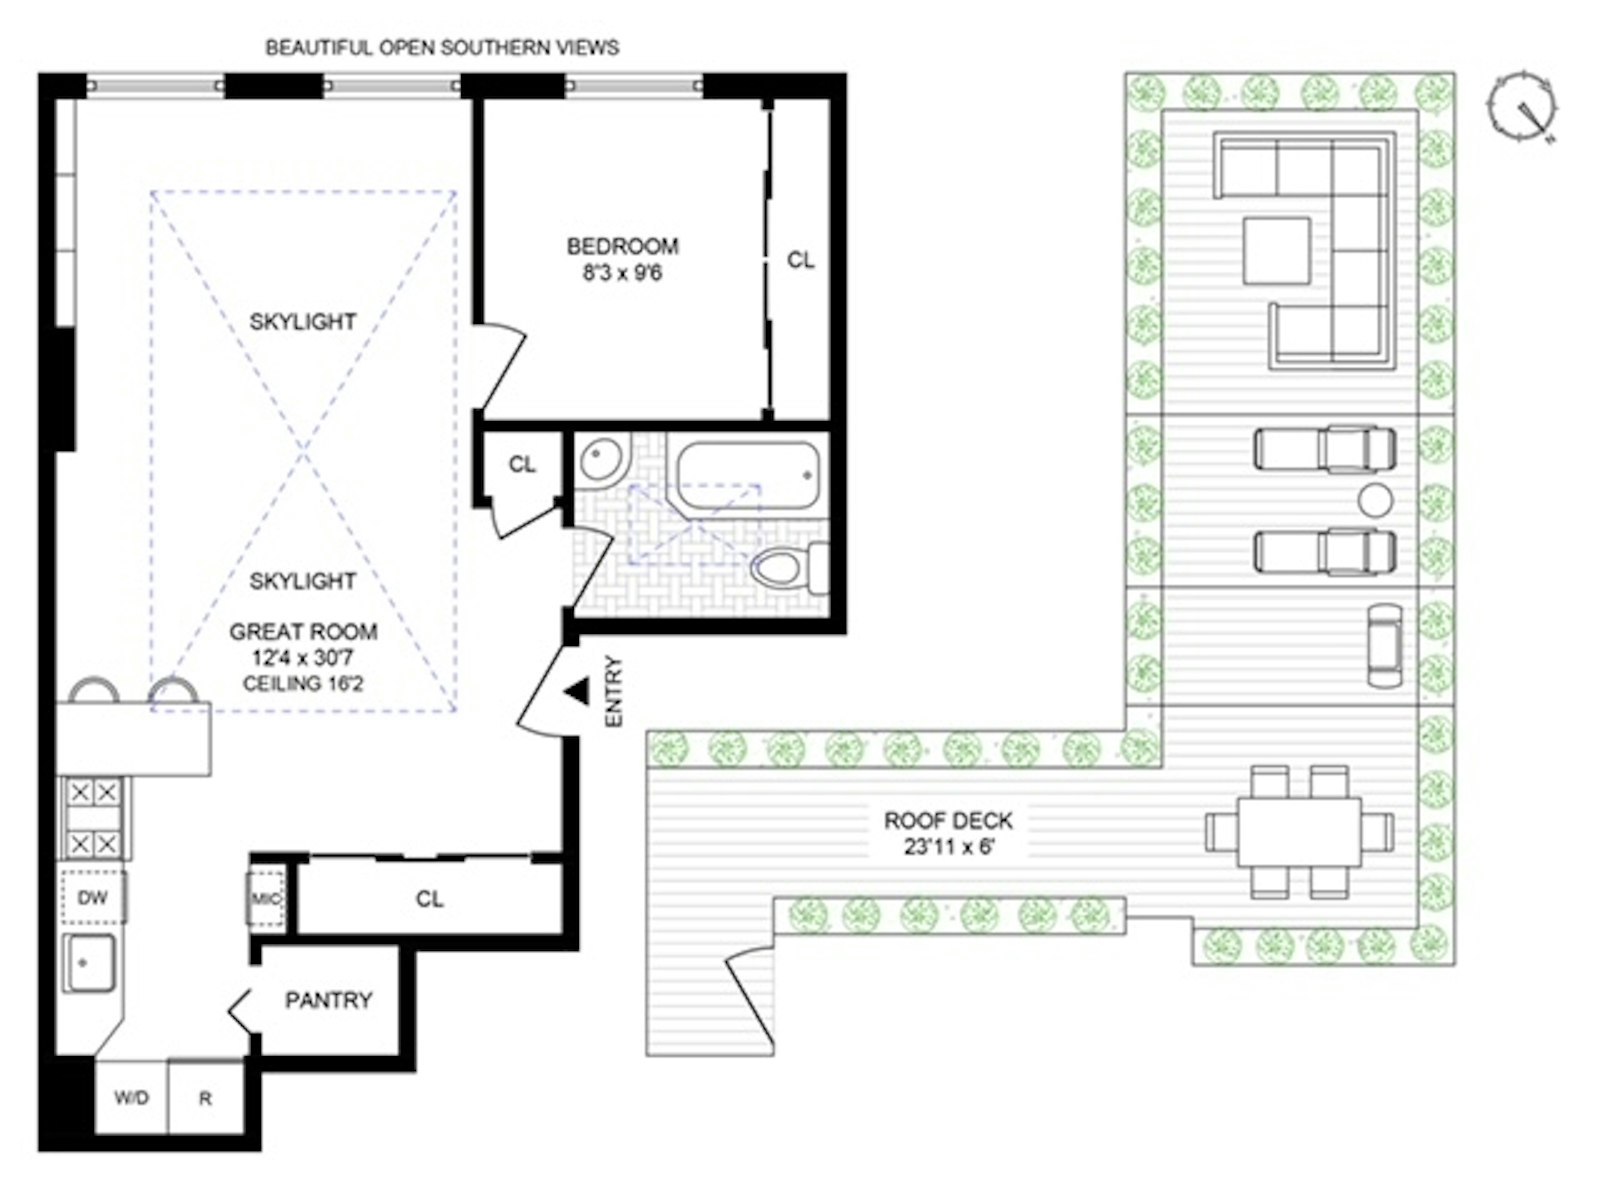 Floorplan for 31 Gramercy Park South, 4B